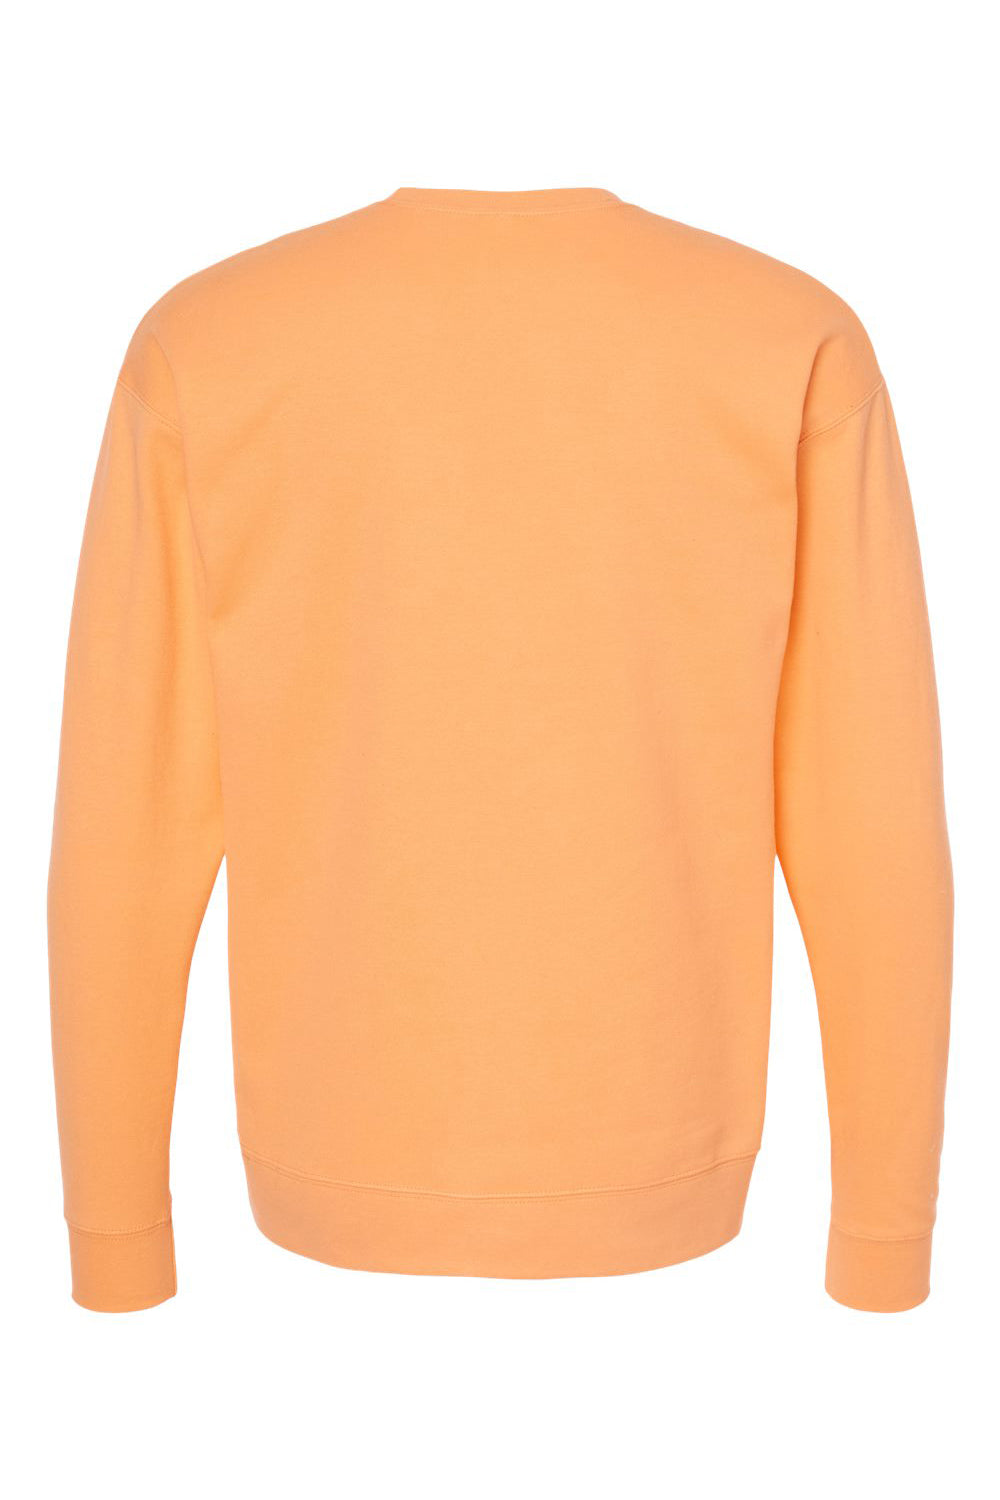 Tultex 340 Mens Fleece Crewneck Sweatshirt Cantaloupe Orange Flat Back